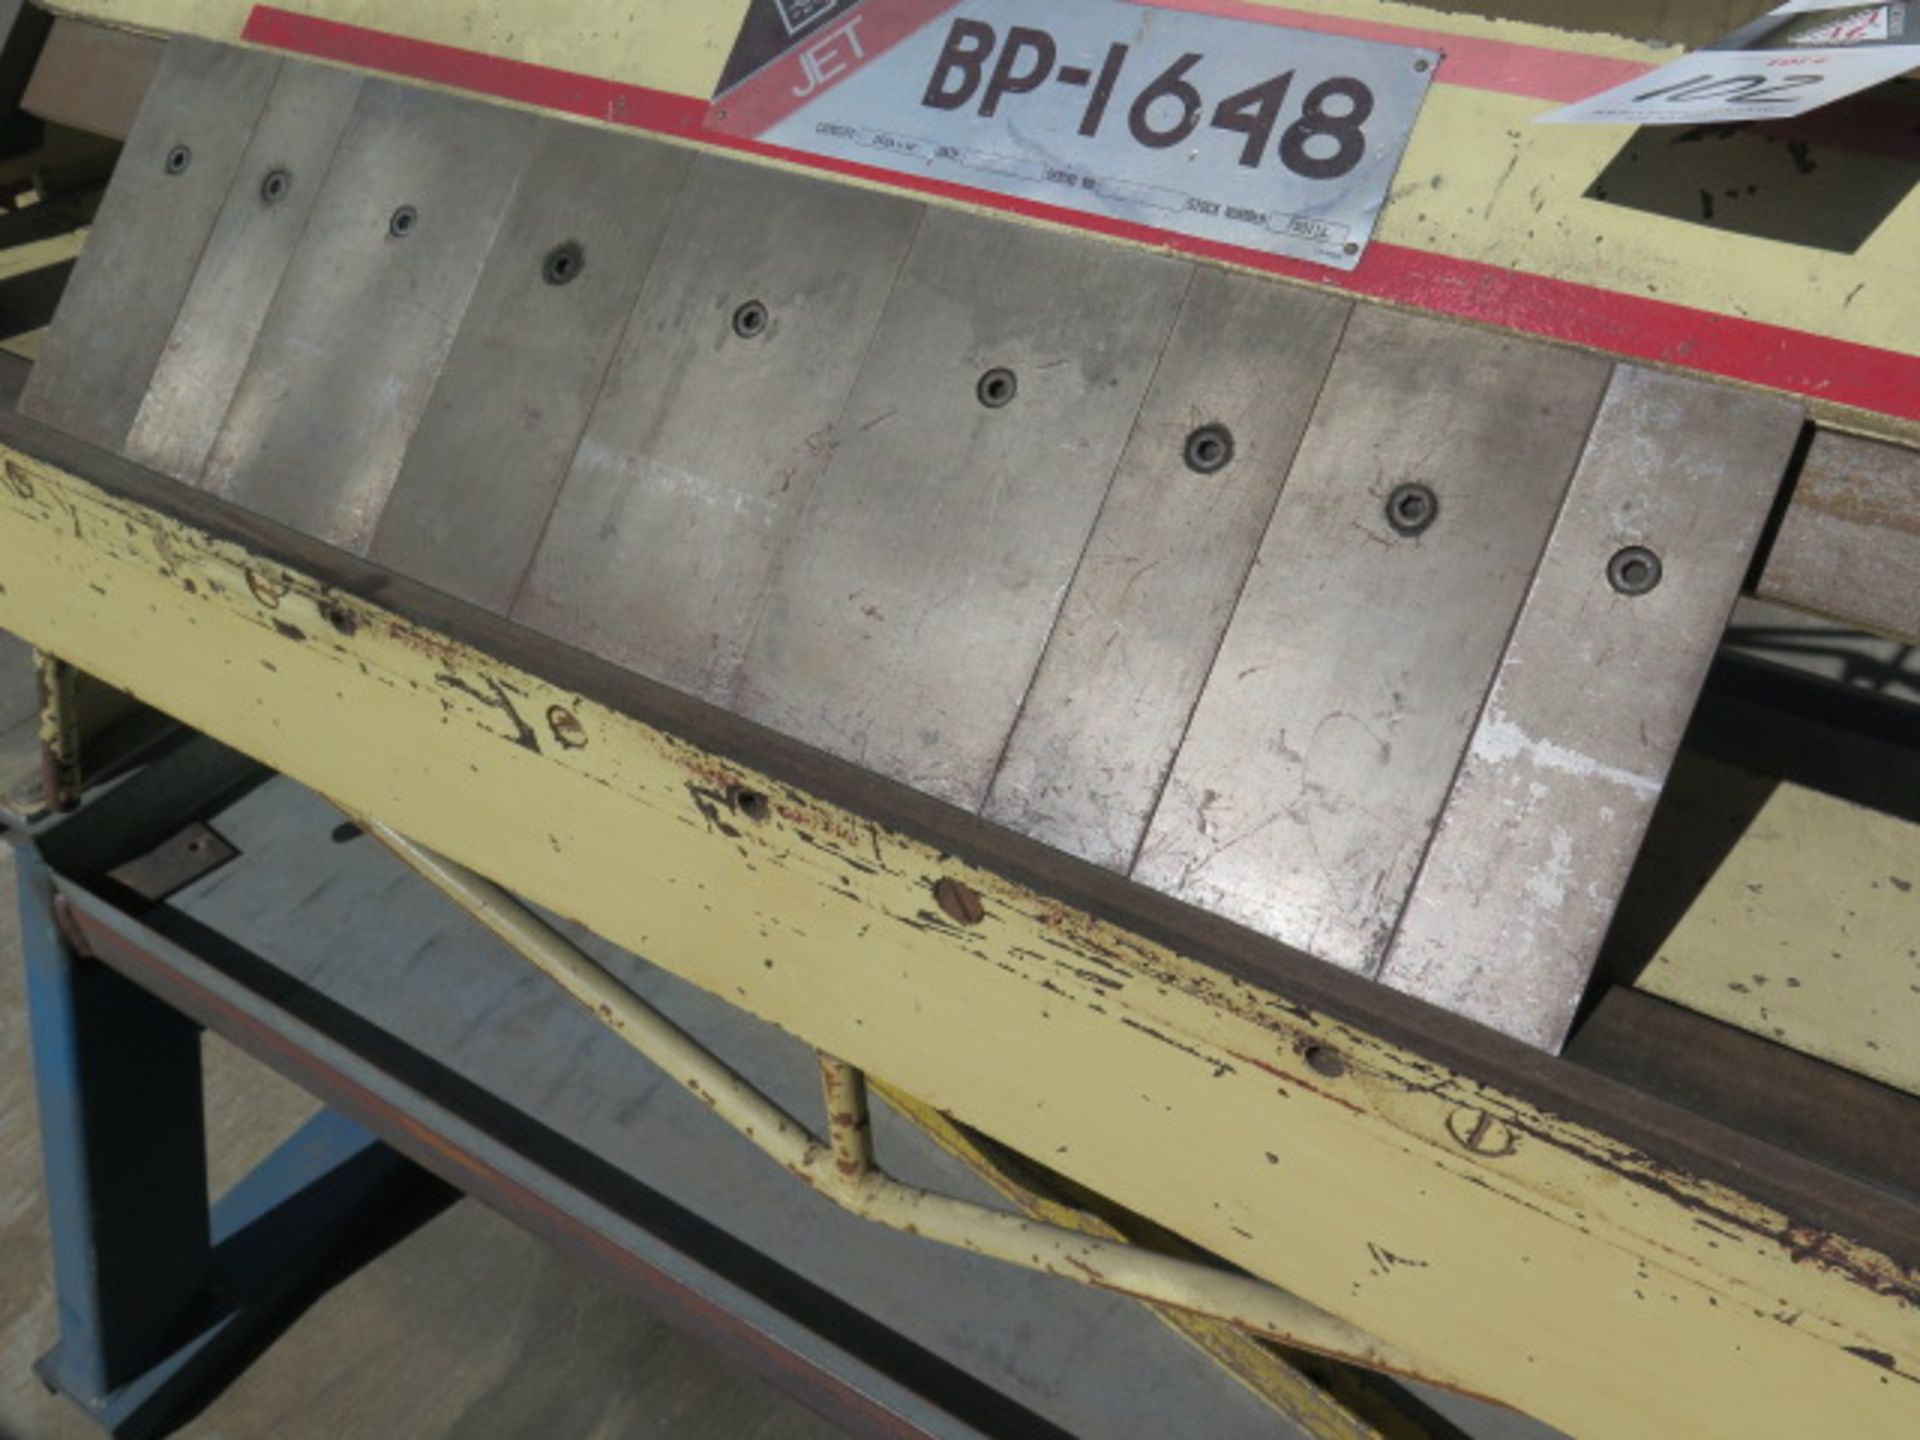 Jet BP-1648 16GA x 48” Finger Brake (MISSING PCS) s/n 1241 (SOLD AS-IS - NO WARRANTY) - Image 5 of 7